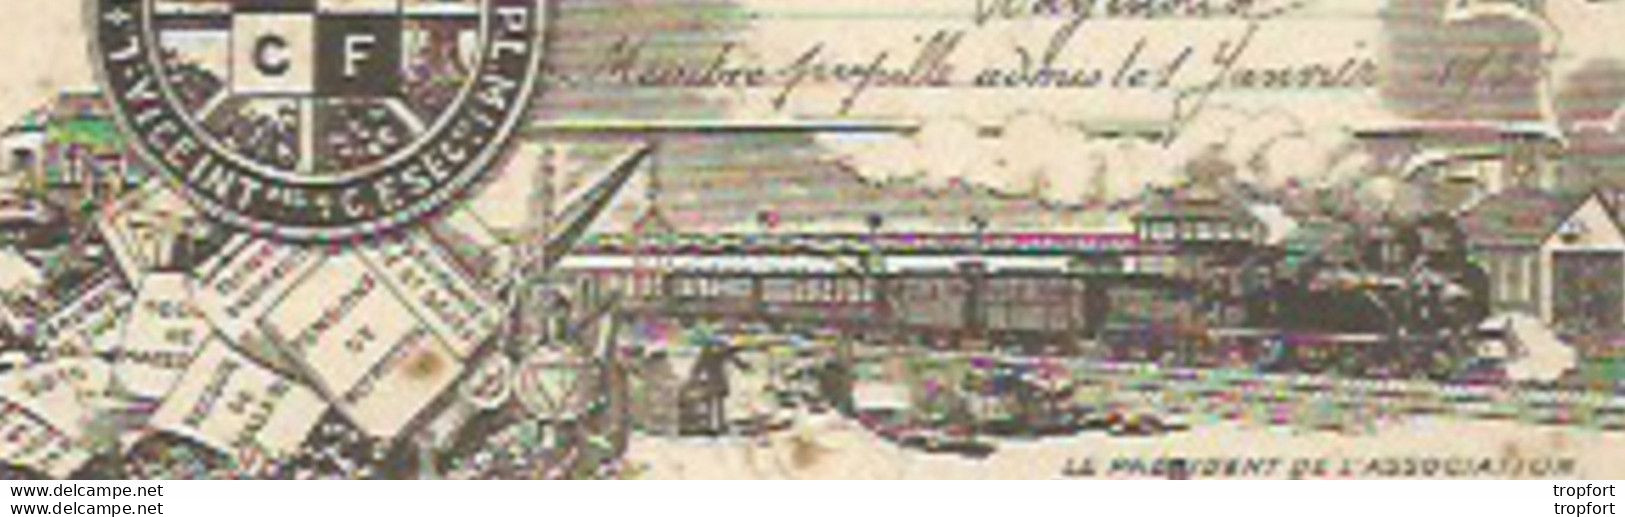 YA / Old Railway Identity Card Carte D'identité Chemin De Fer SNCF 1928 TRAIN - Tarjetas De Membresía